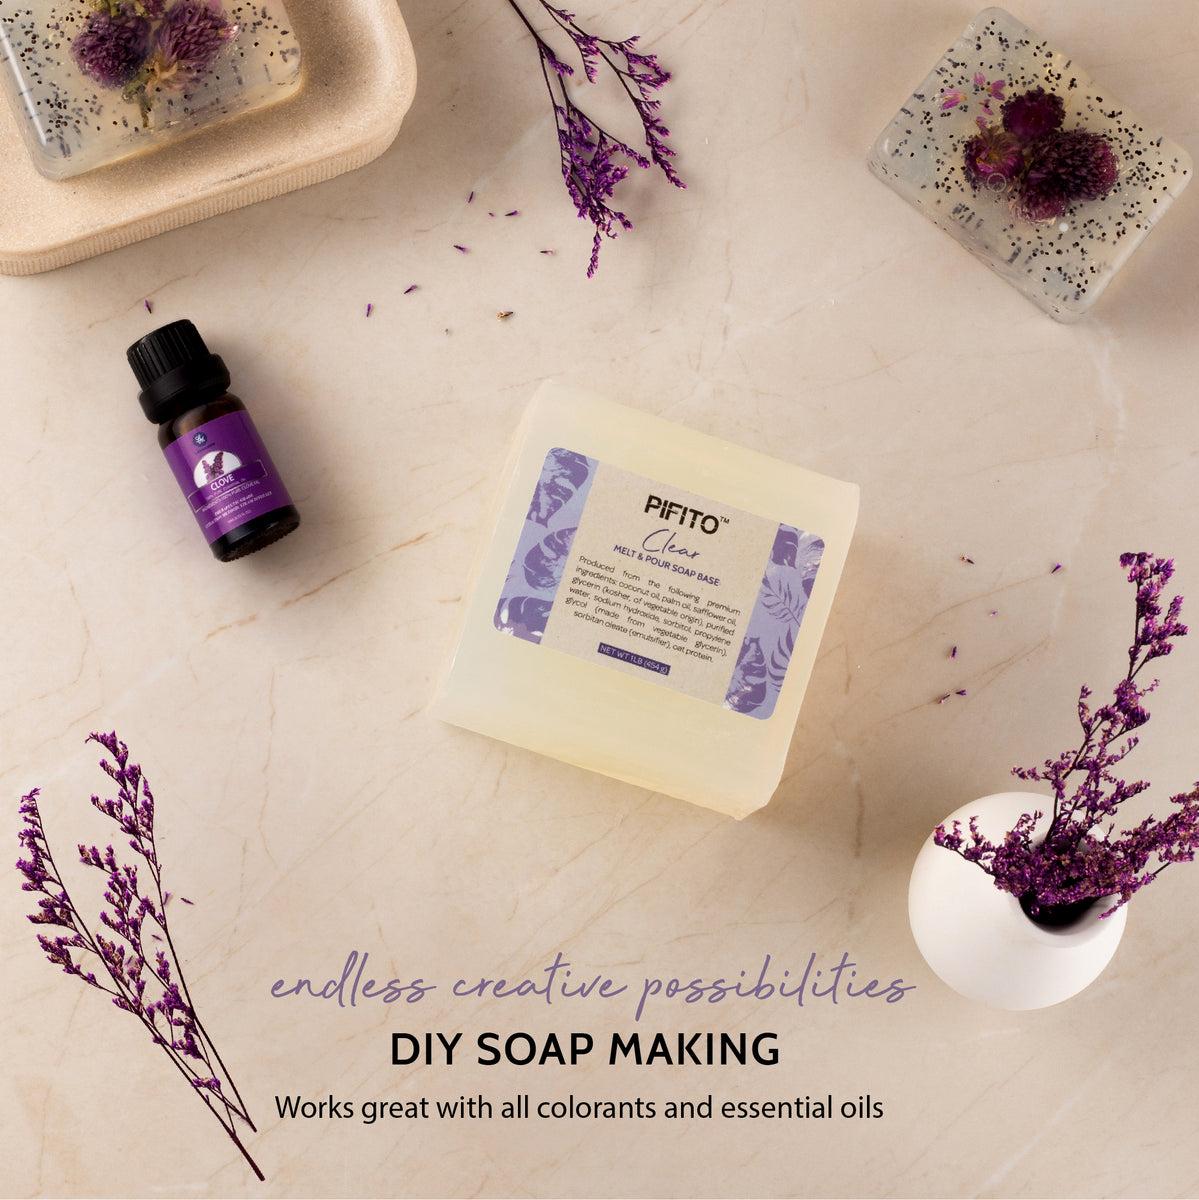 Pifito Clear Melt and Pour Soap Base (5 lb) │ Bulk Premium 100% Natural  Glycerin Soap Base │ Luxurious Soap Making Supplies 